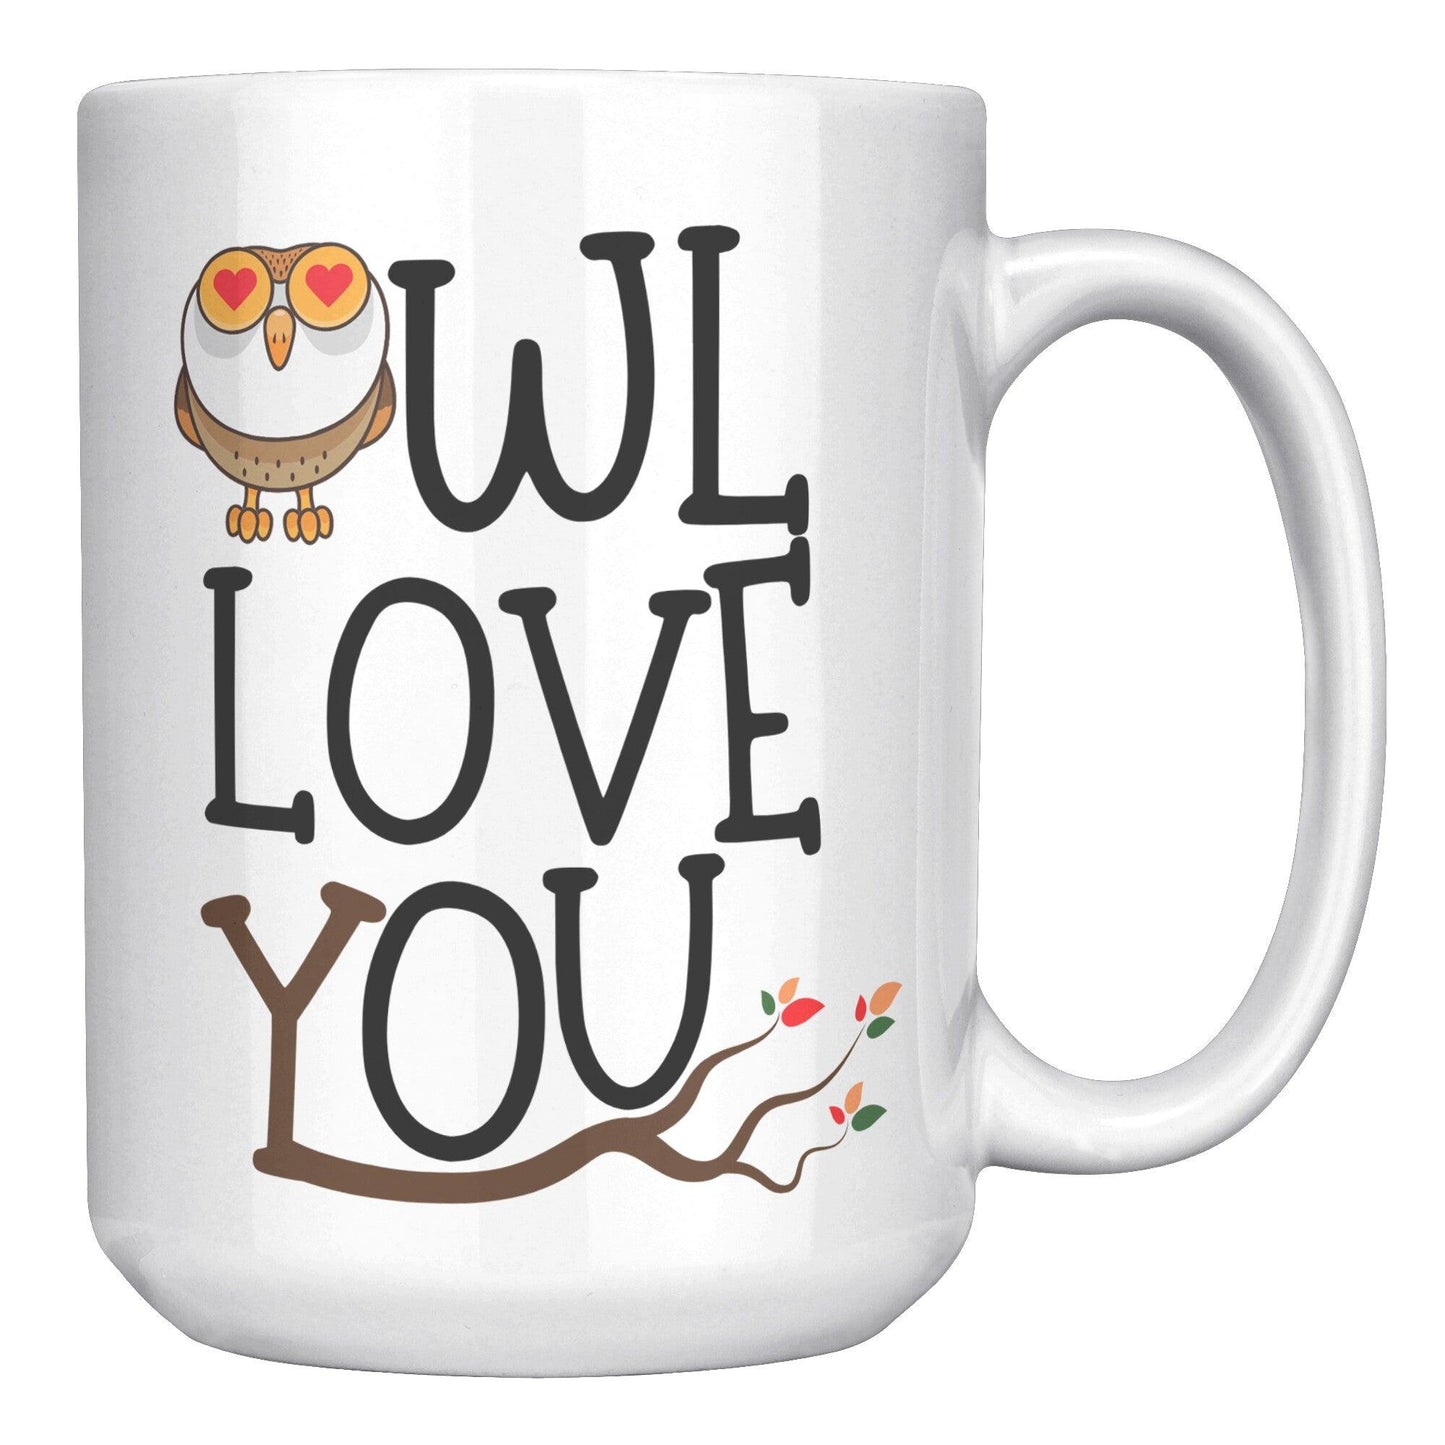 Orange Owl Love You White Mug - TheGivenGet